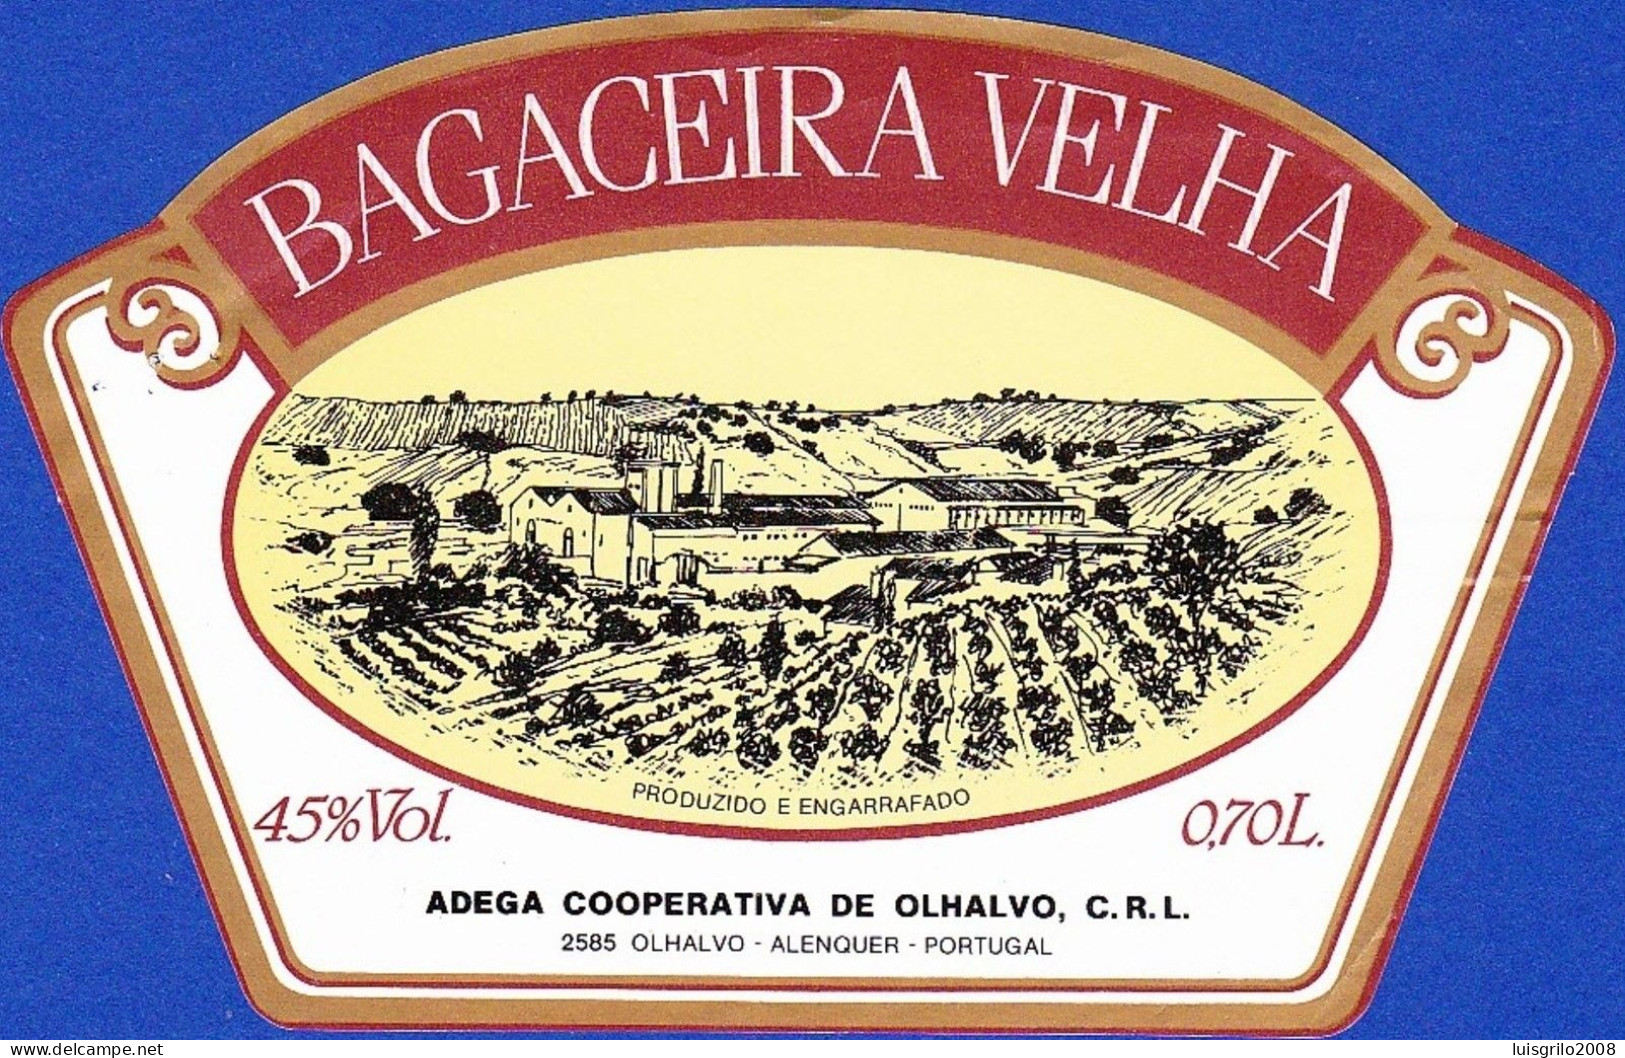 Brandy Label, Portugal - BAGACEIRA VELHA. Adega Cooperativa De Olhalvo.  Alenquer - Alcools & Spiritueux